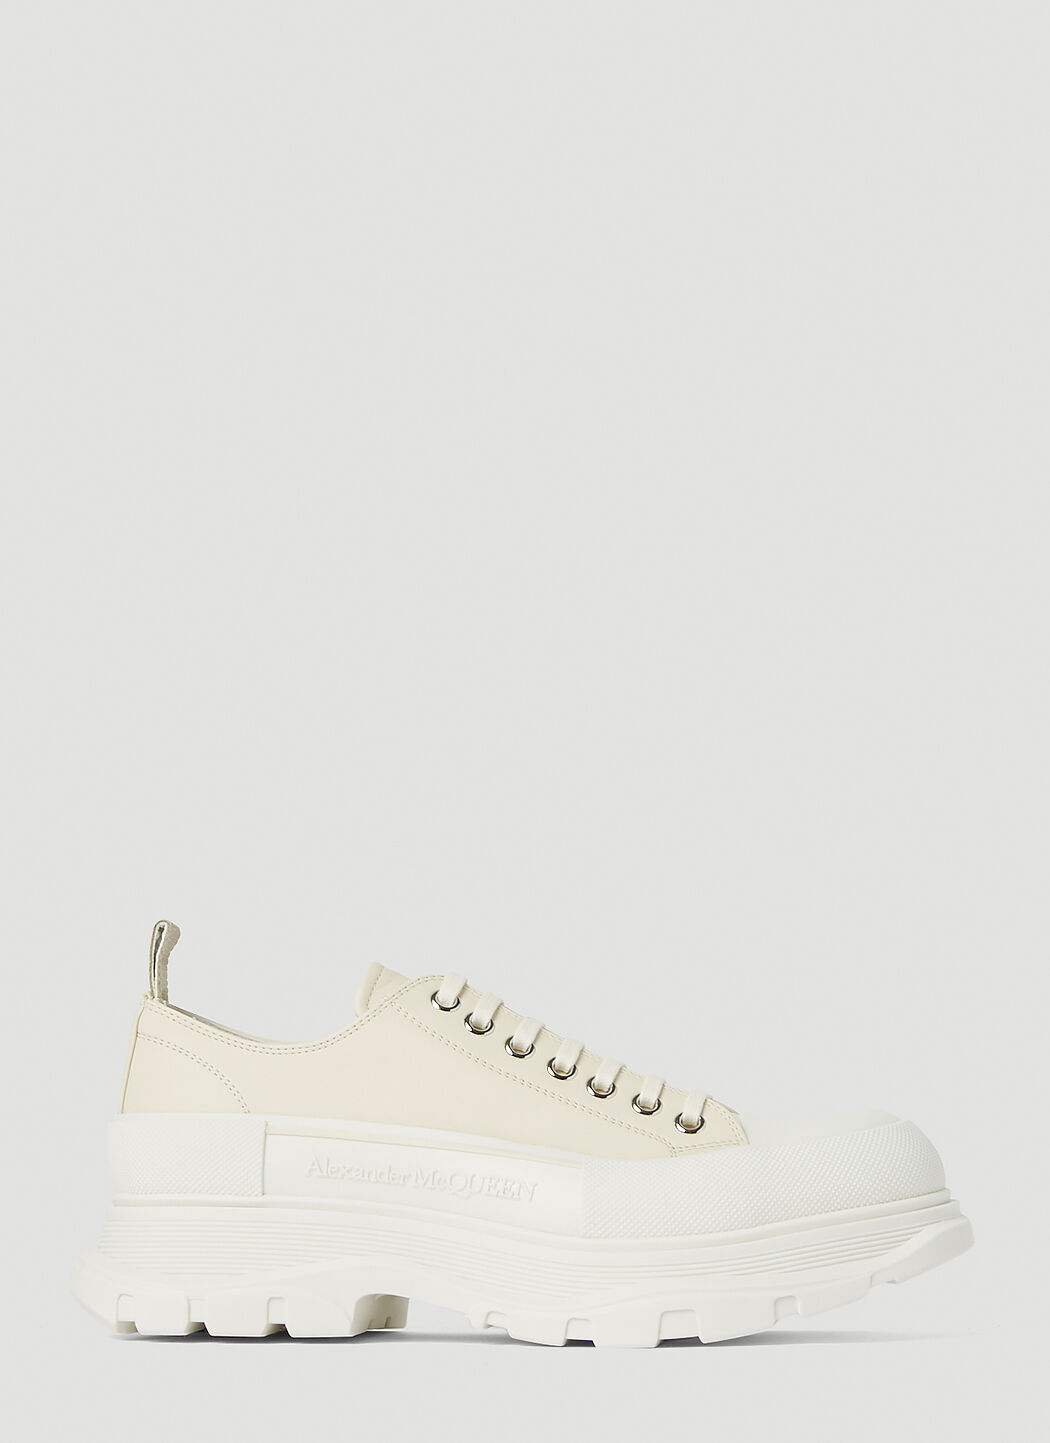 Alexander McQueen Tread Slick Sneakers White amq0149025